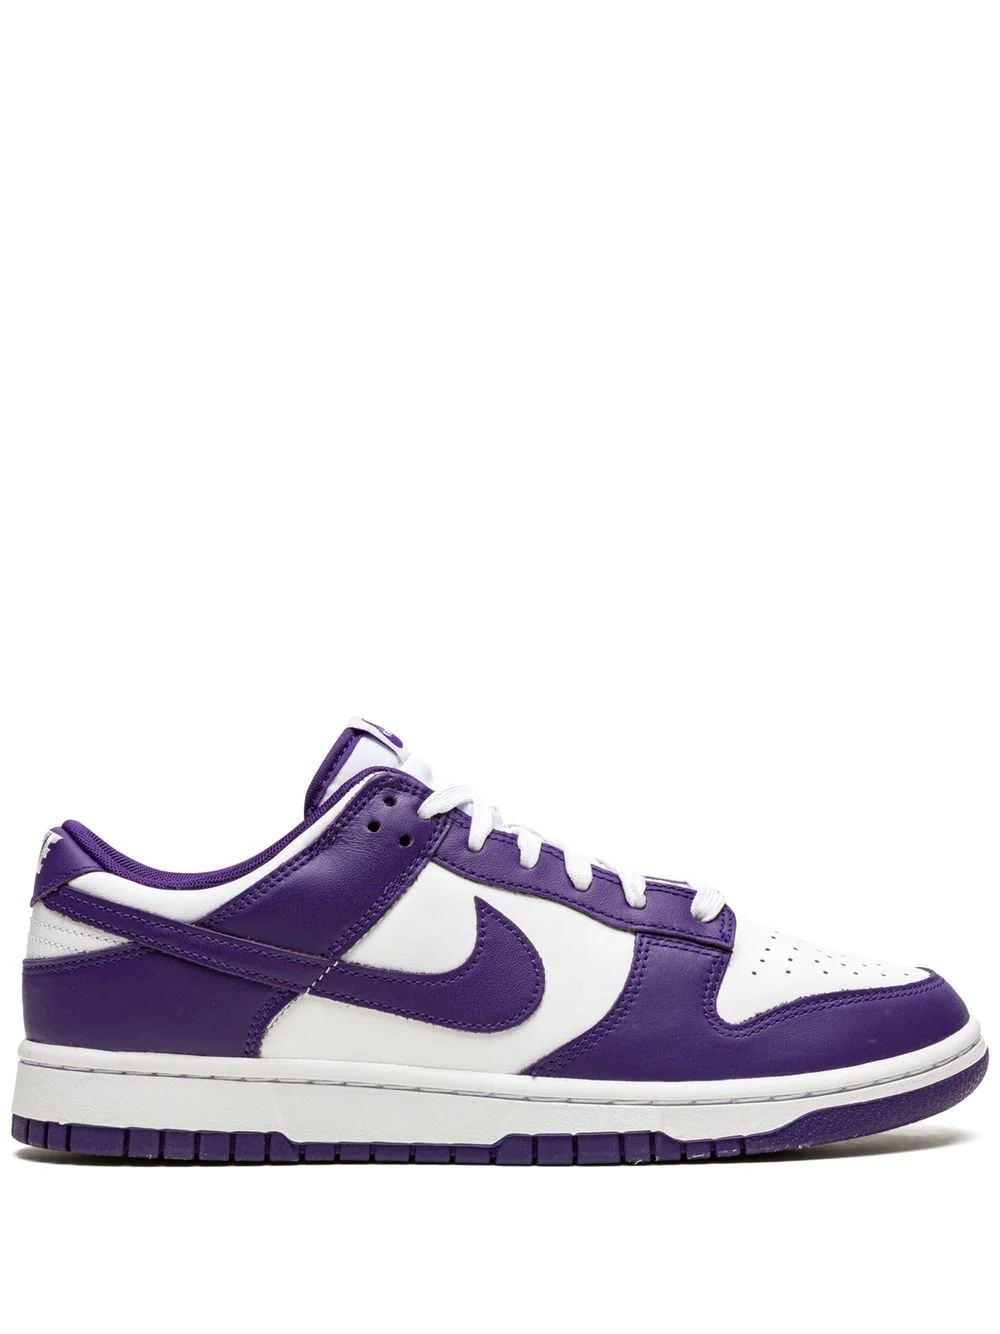 Dunk Low "Court Purple" sneakers - 1